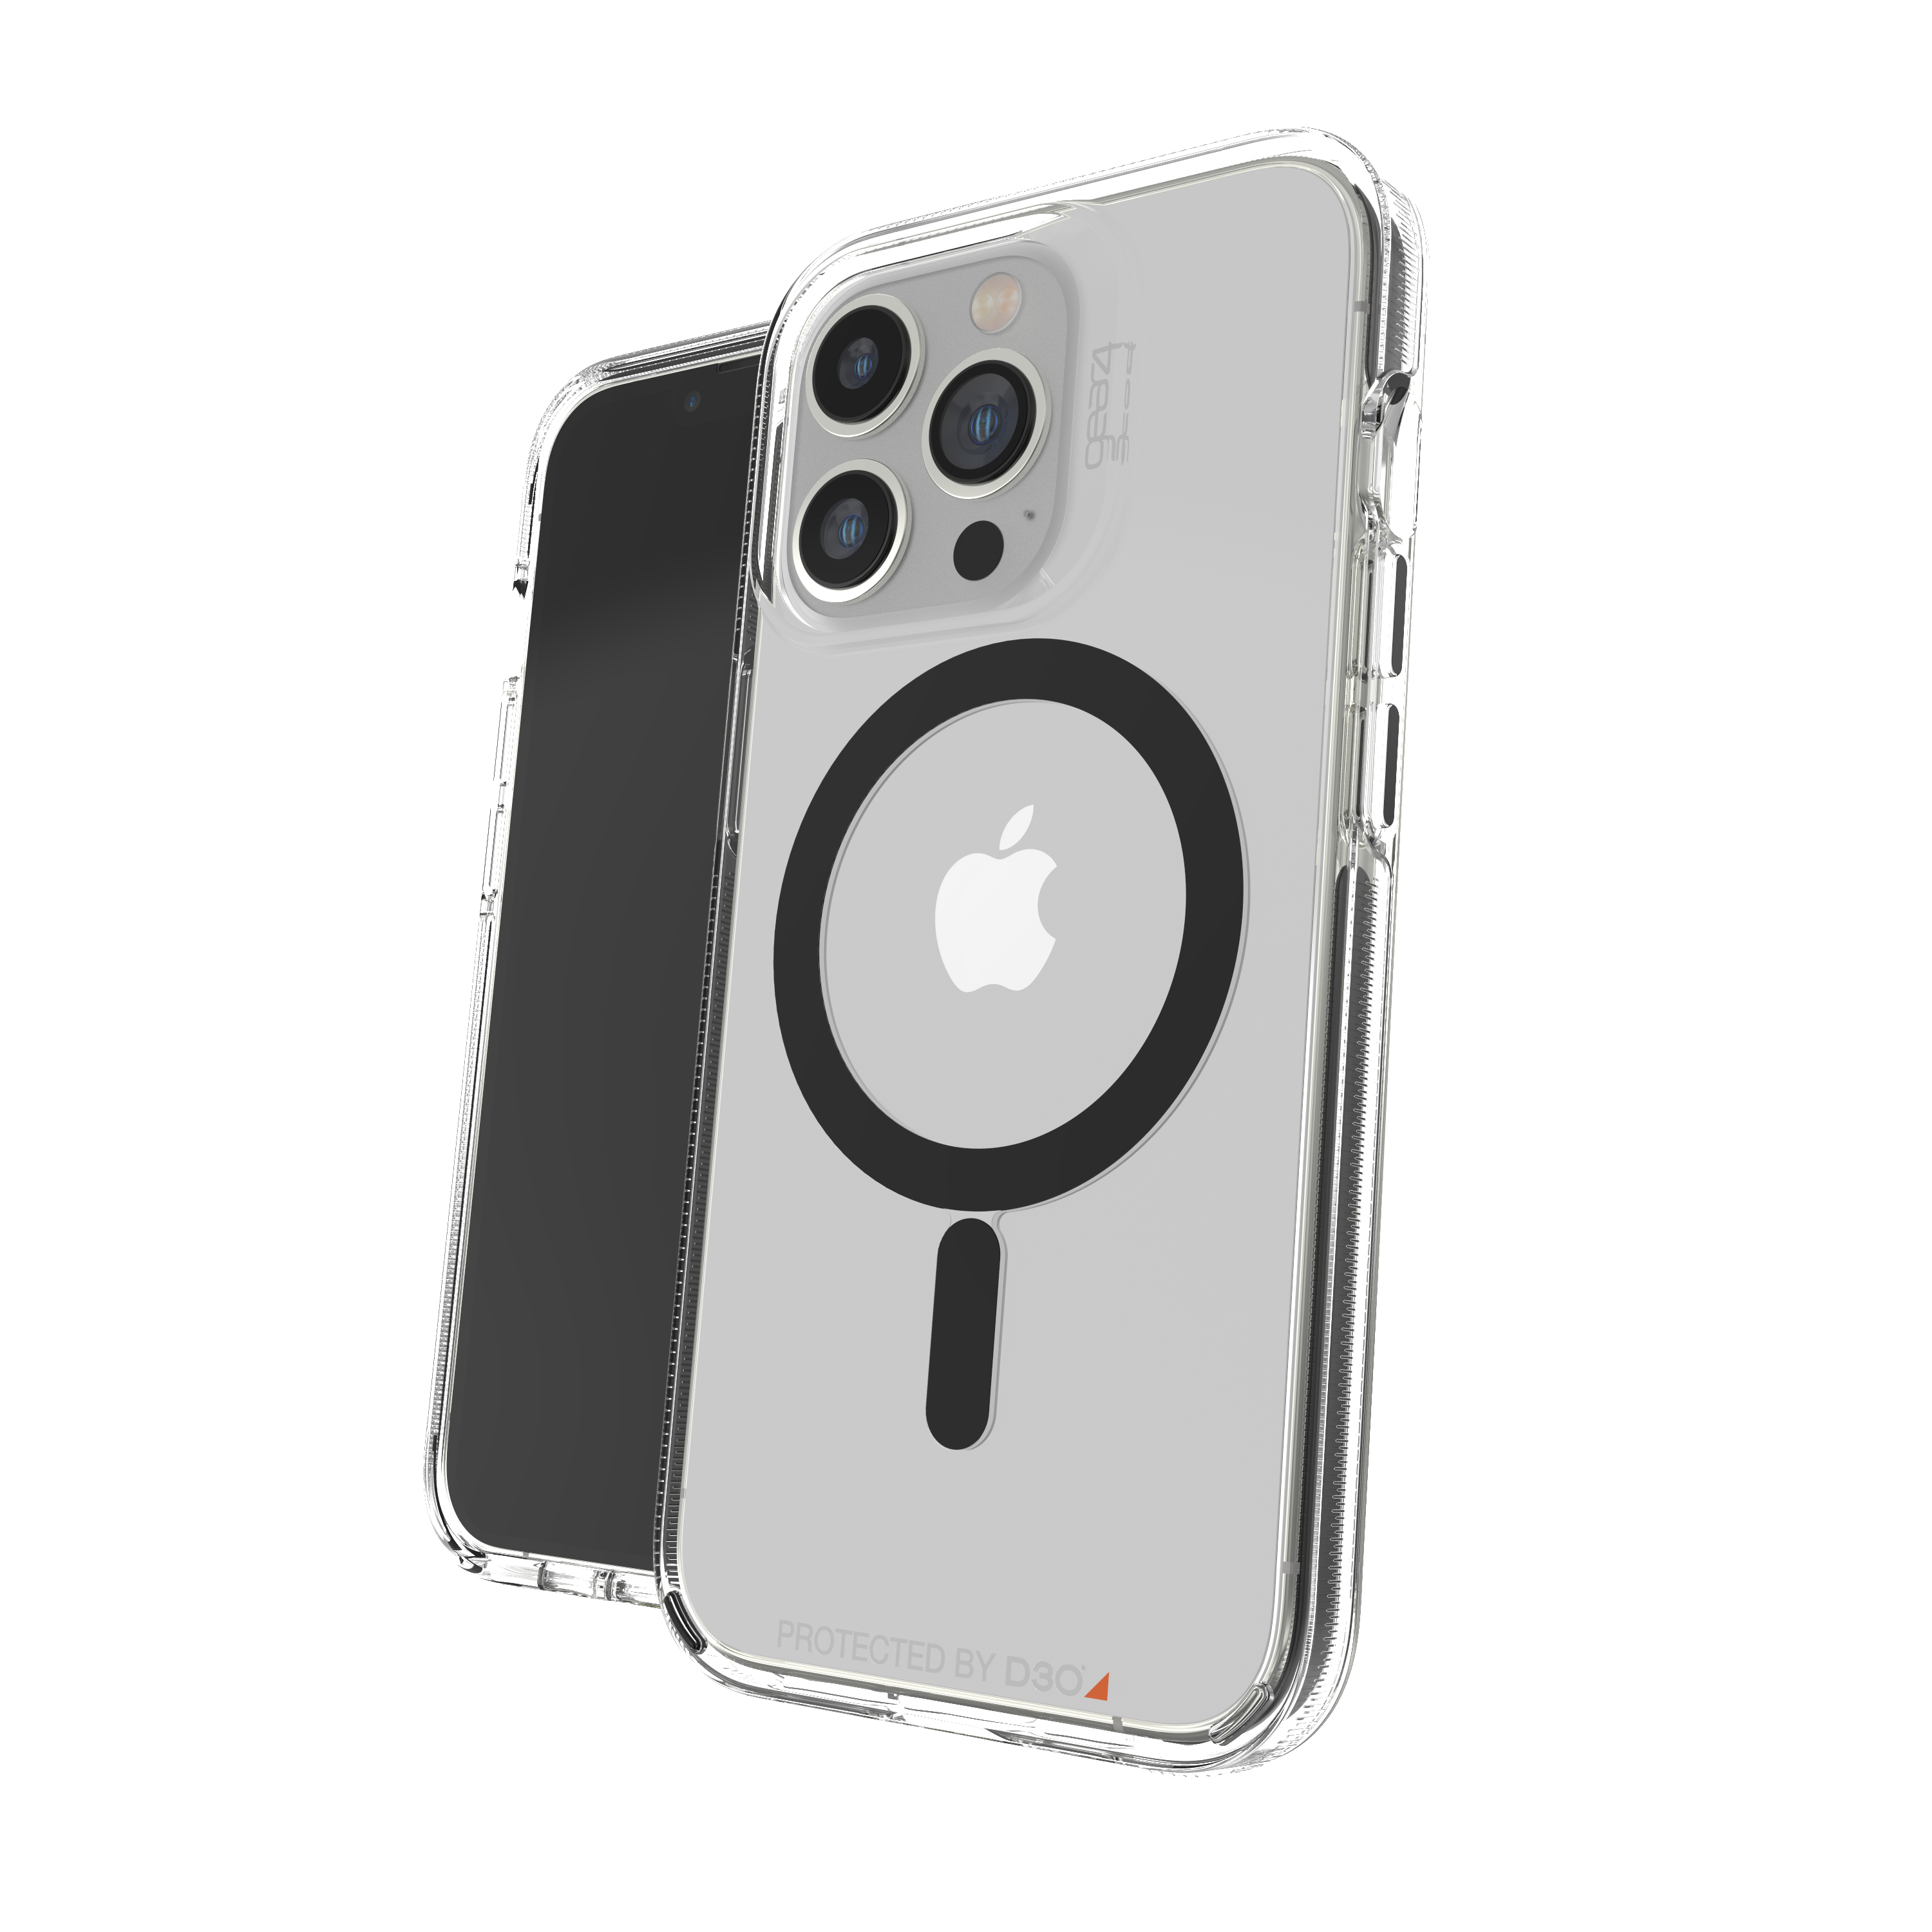 GEAR4 D3O Pro, Cruz iPhone Backcover, Schwarz Snap, Cases 13 Apple, Santa